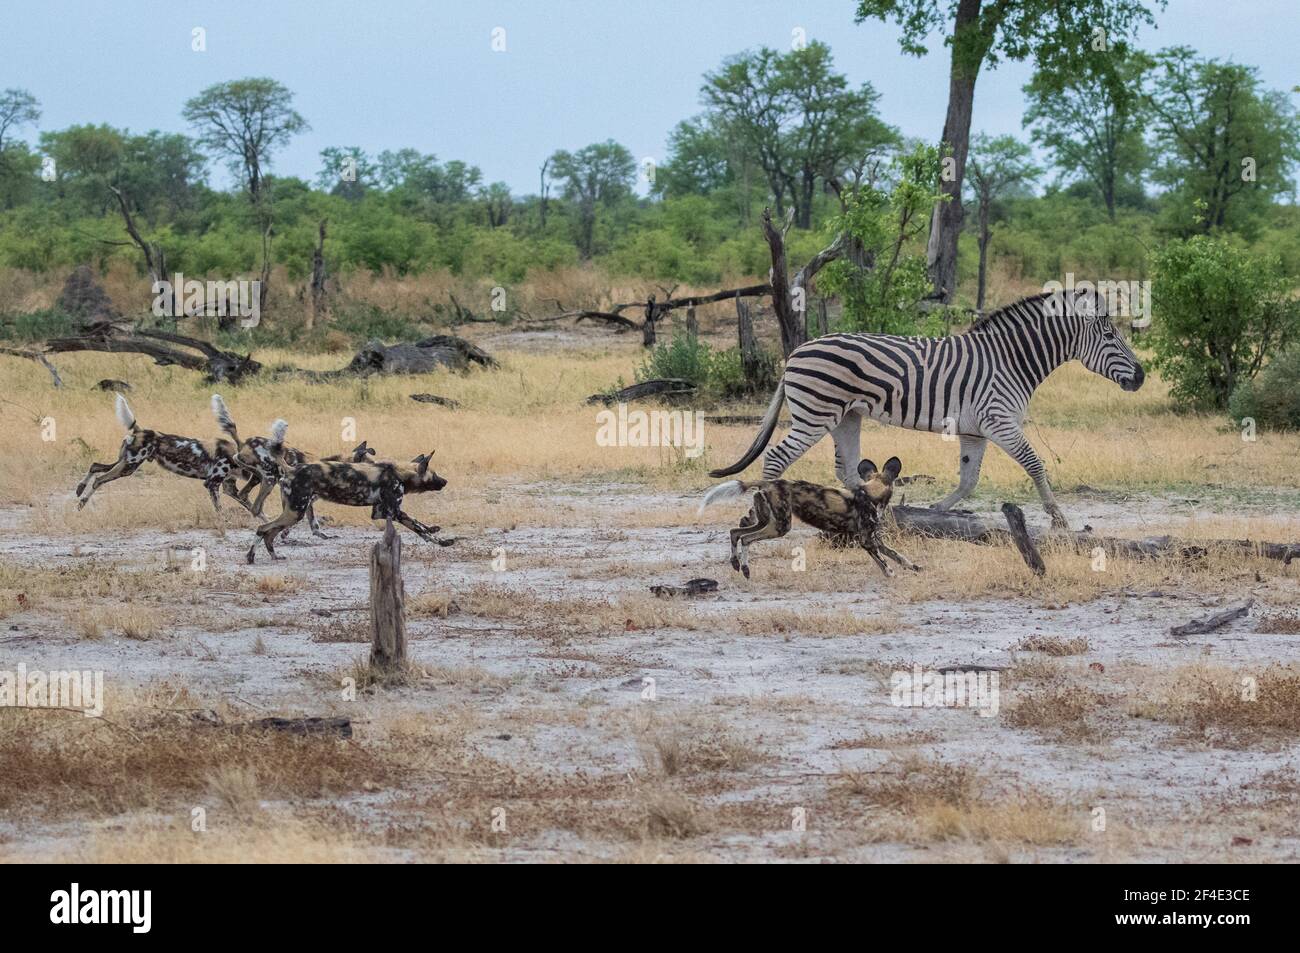 African Wild Dogs chasing a zebra in Botswana's Okavango Delta. Stock Photo